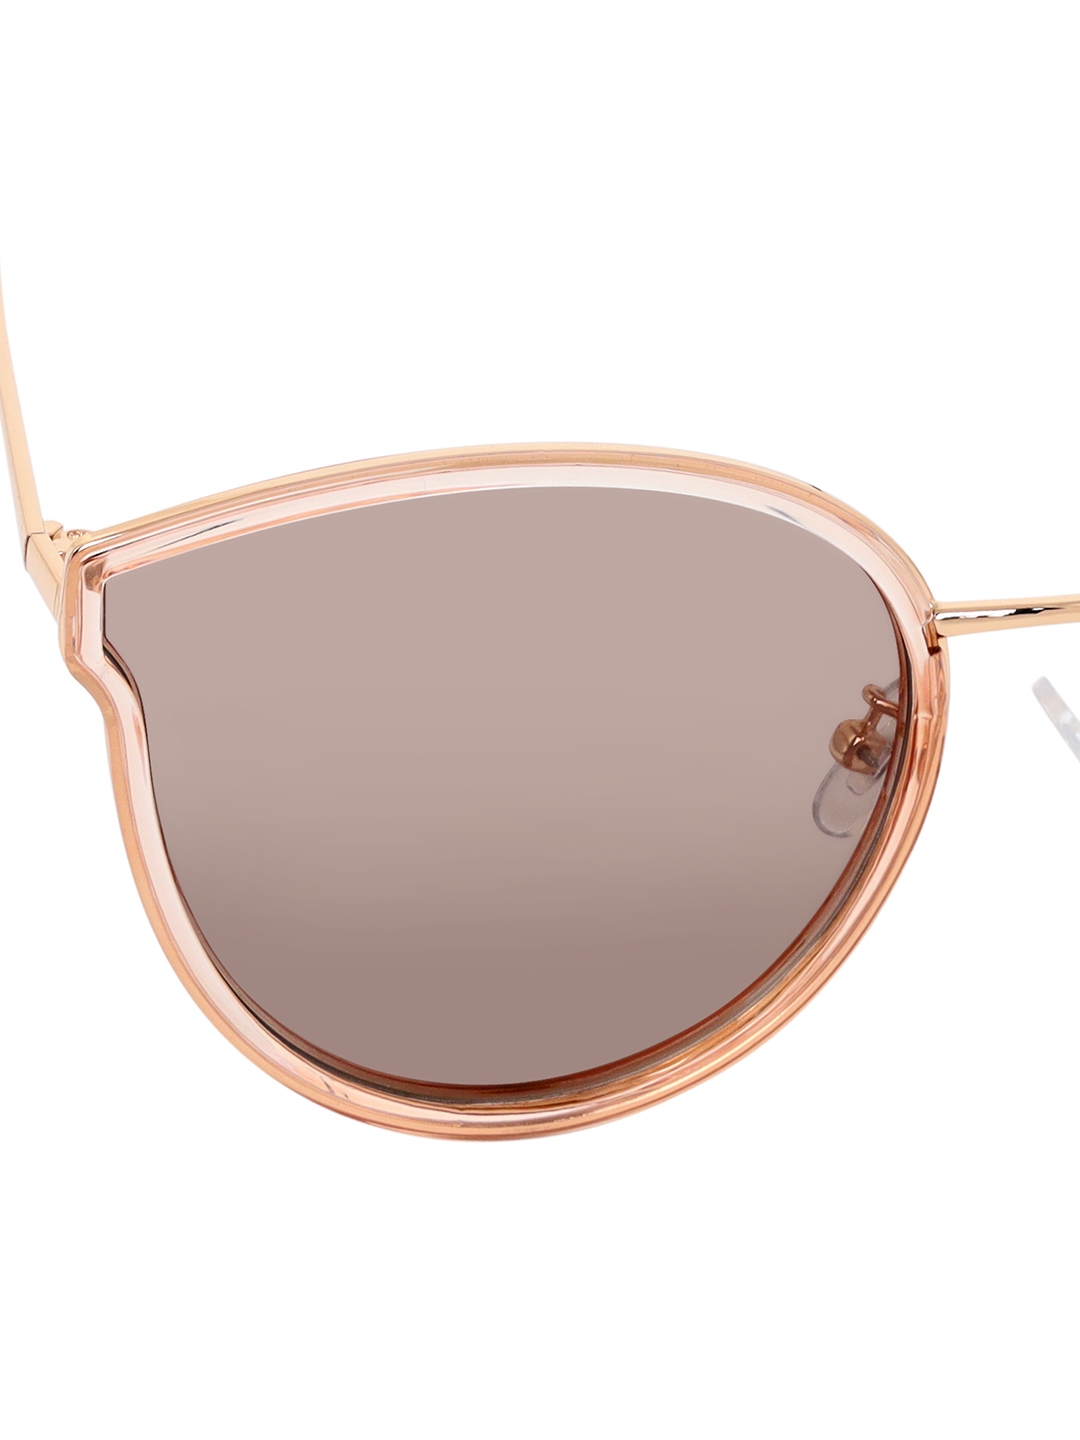 Aeropostale | Aeropostale AERO_SUN_29920_C3 Summer Sunglasses with UV protection Polarized Anti Glare Summer Style Shaded Grey Reflective Lenses with Golden Mettalic Frame 3